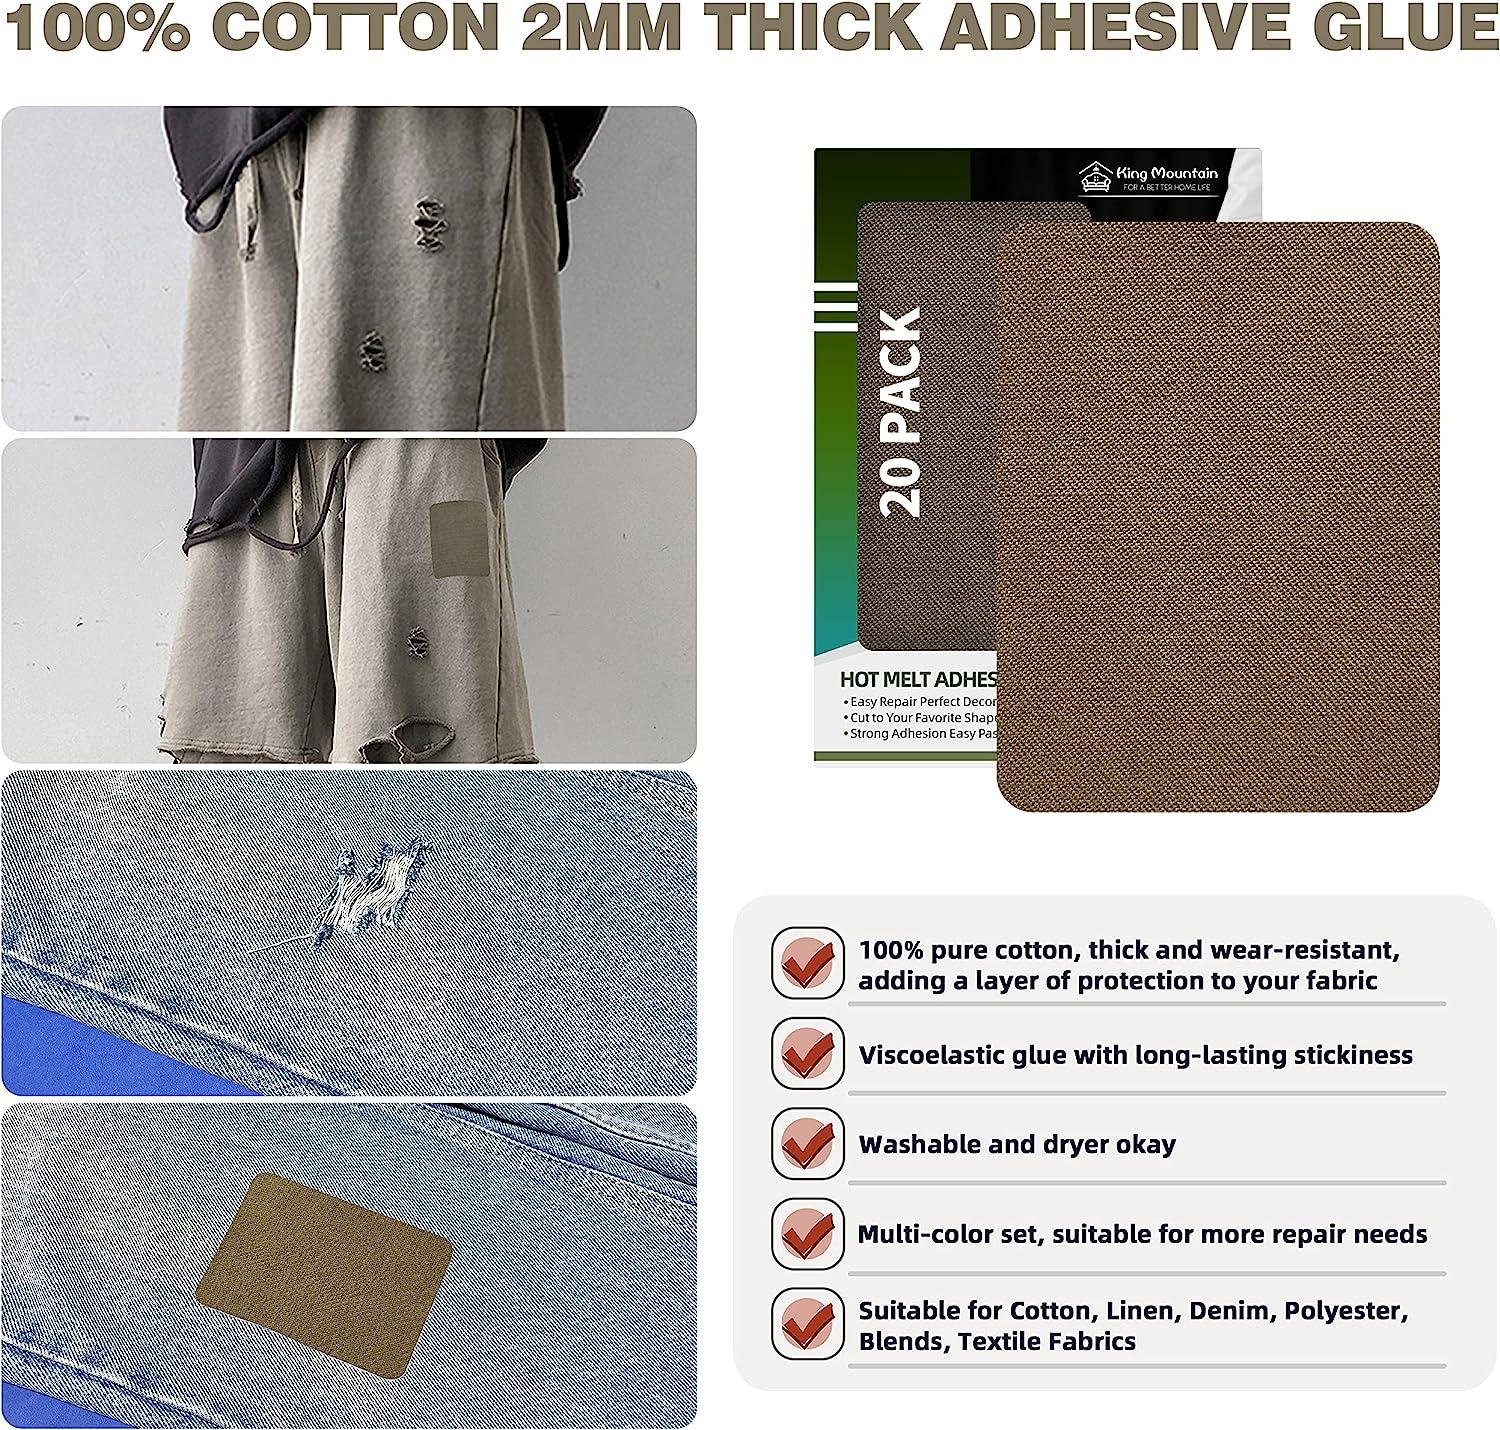 155g Cloth Glue Adhesive Clothing Repair Printing Pattern